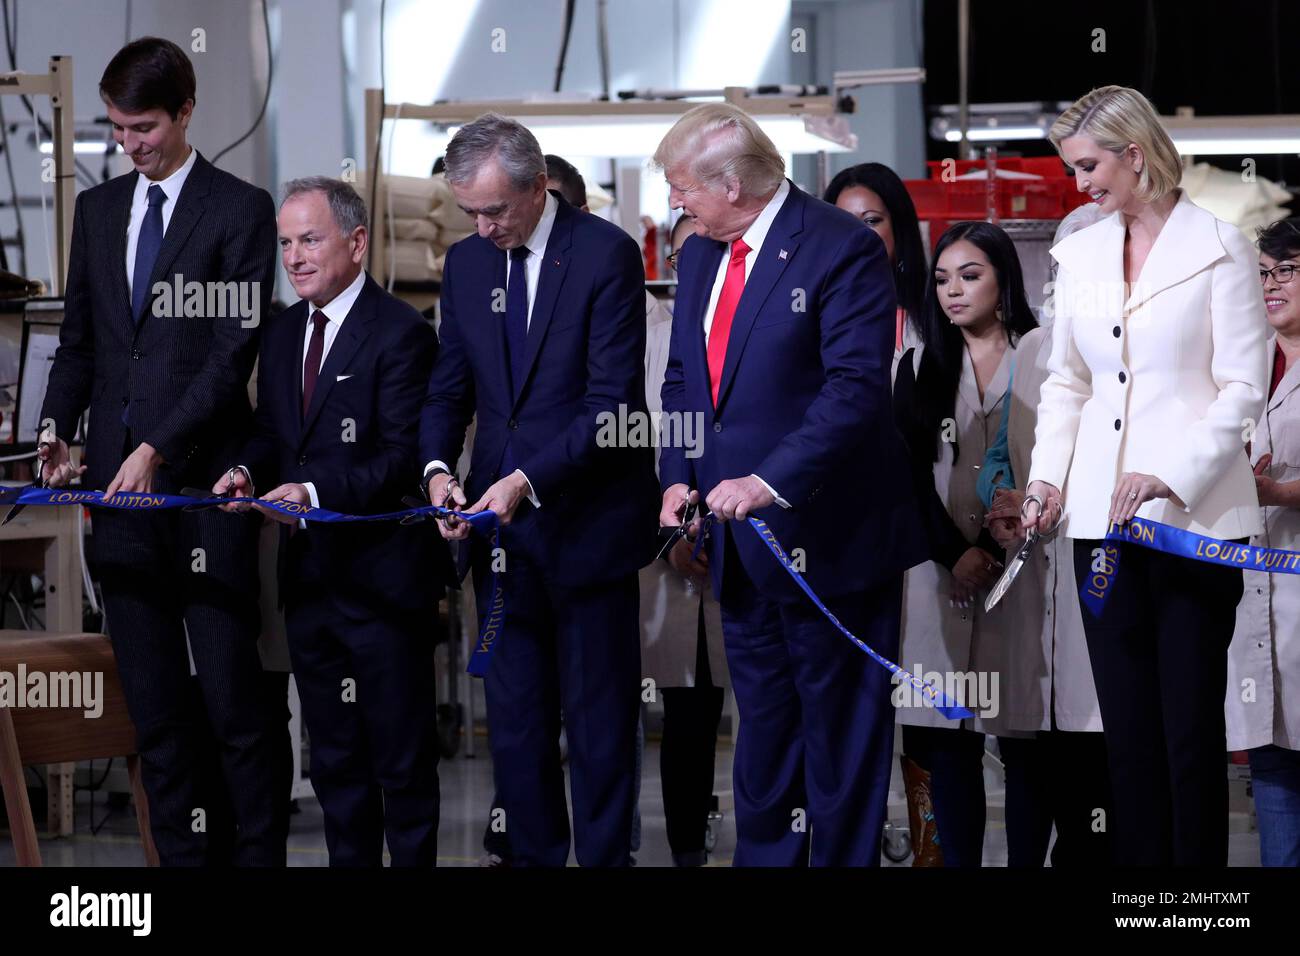 Donald Trump Cuts Ribbon on Louis Vuitton Workshop